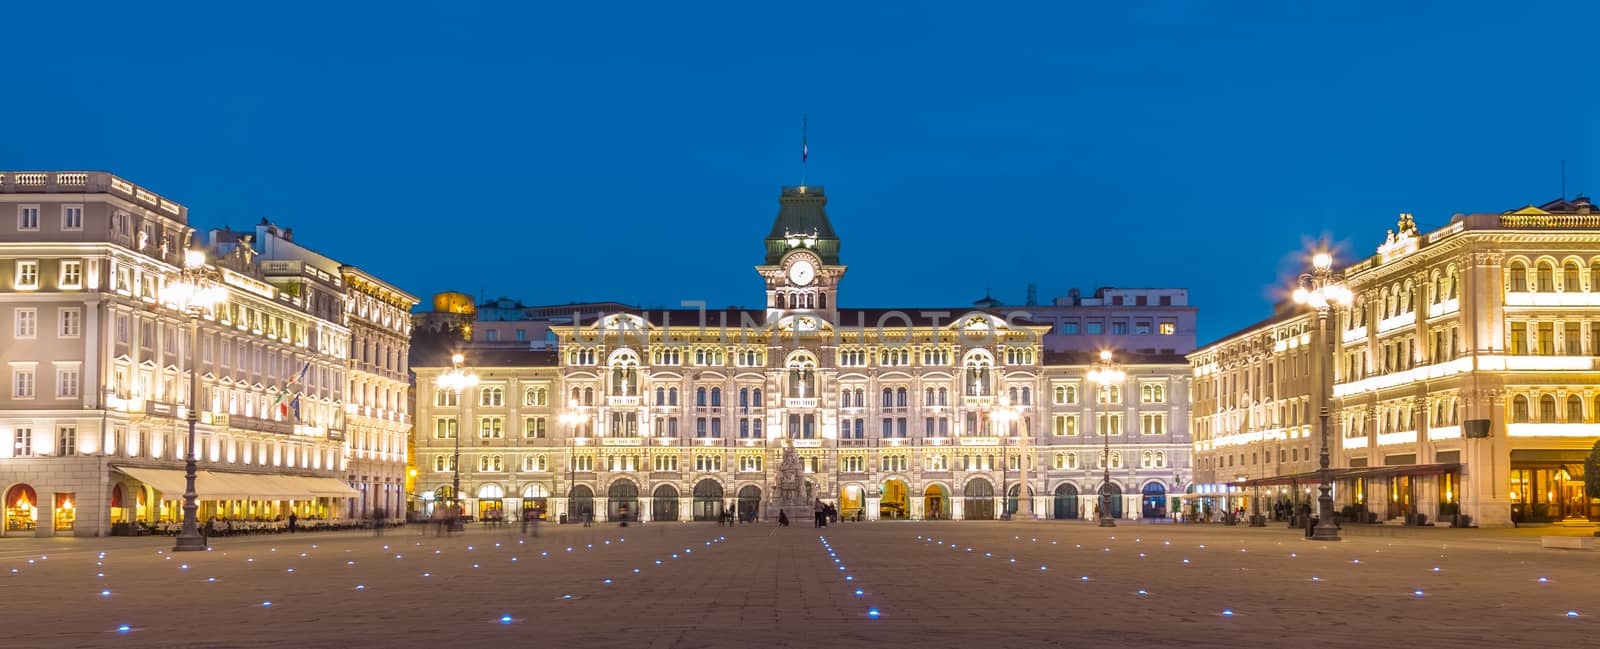 City Hall, Palazzo del Municipio, Trieste, Italy. by kasto